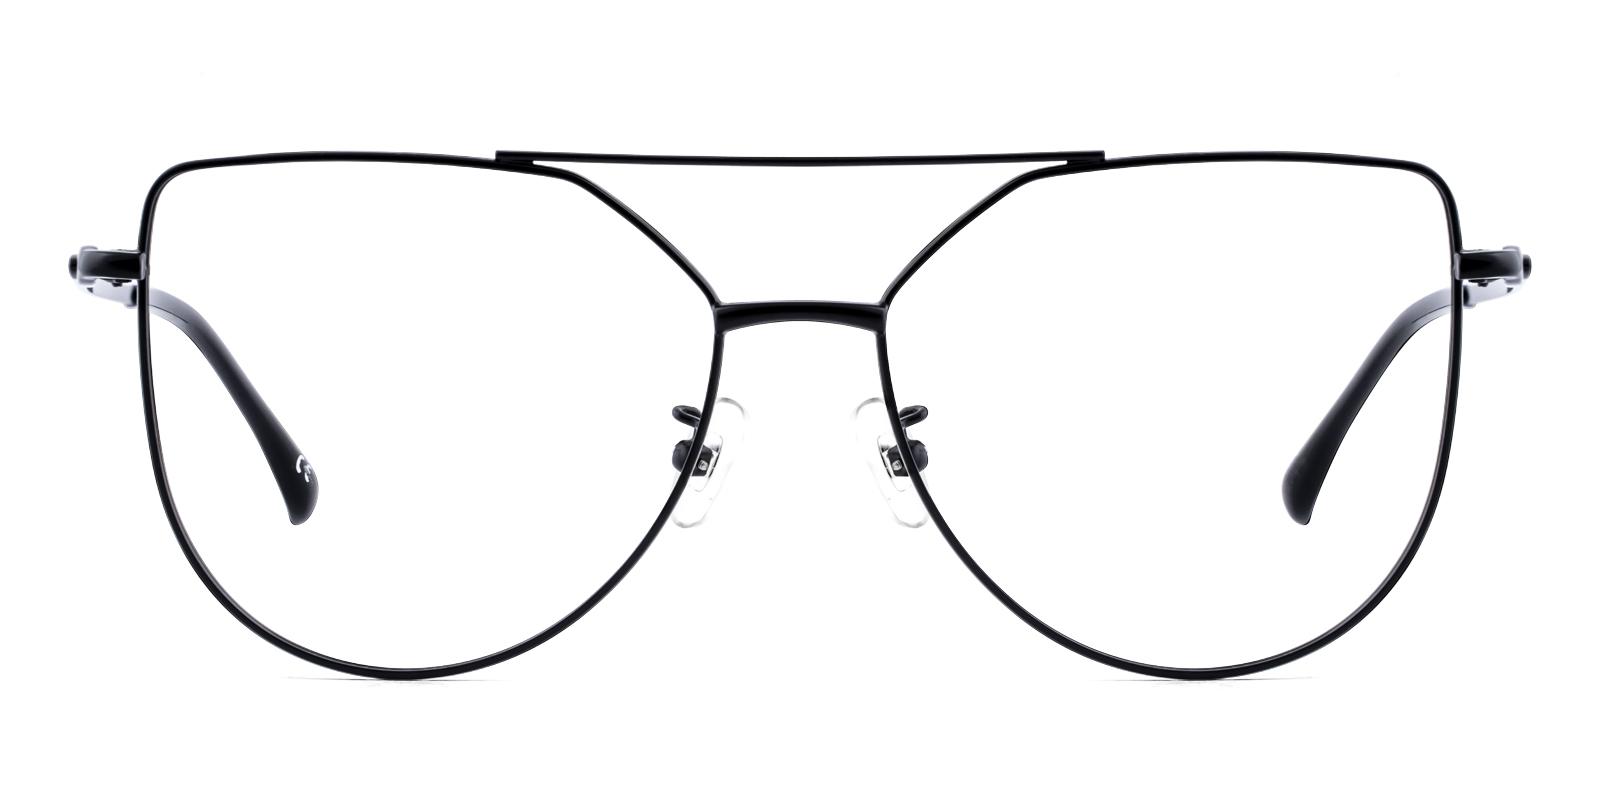 Opoit Black Metal Eyeglasses , NosePads Frames from ABBE Glasses